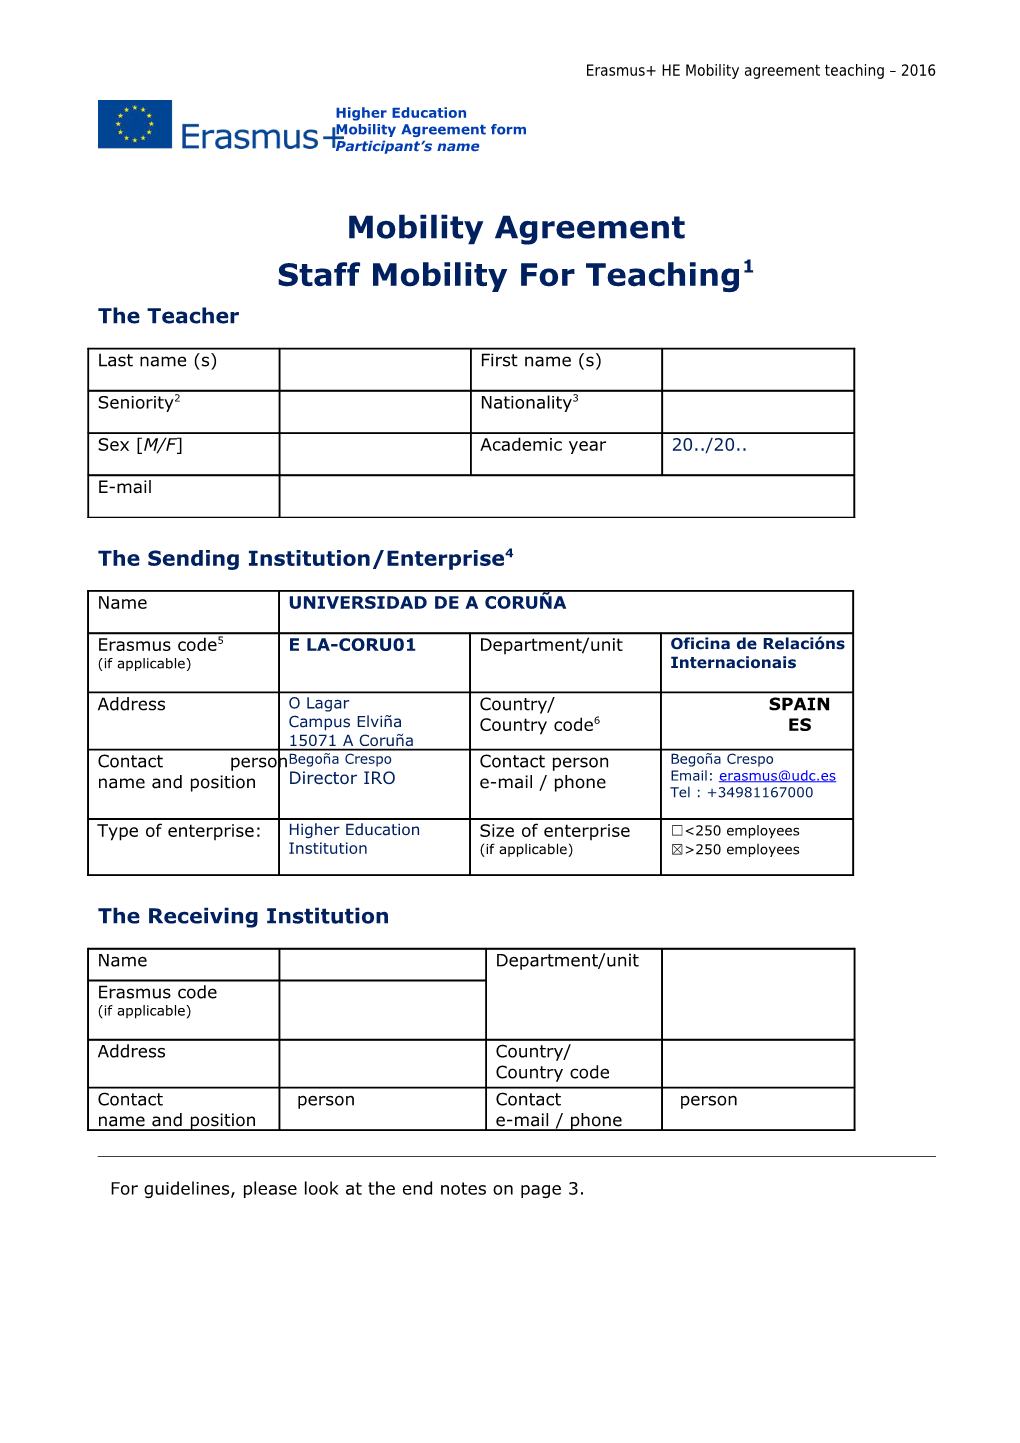 Erasmus+ HE Mobility Agreement Teaching 2016